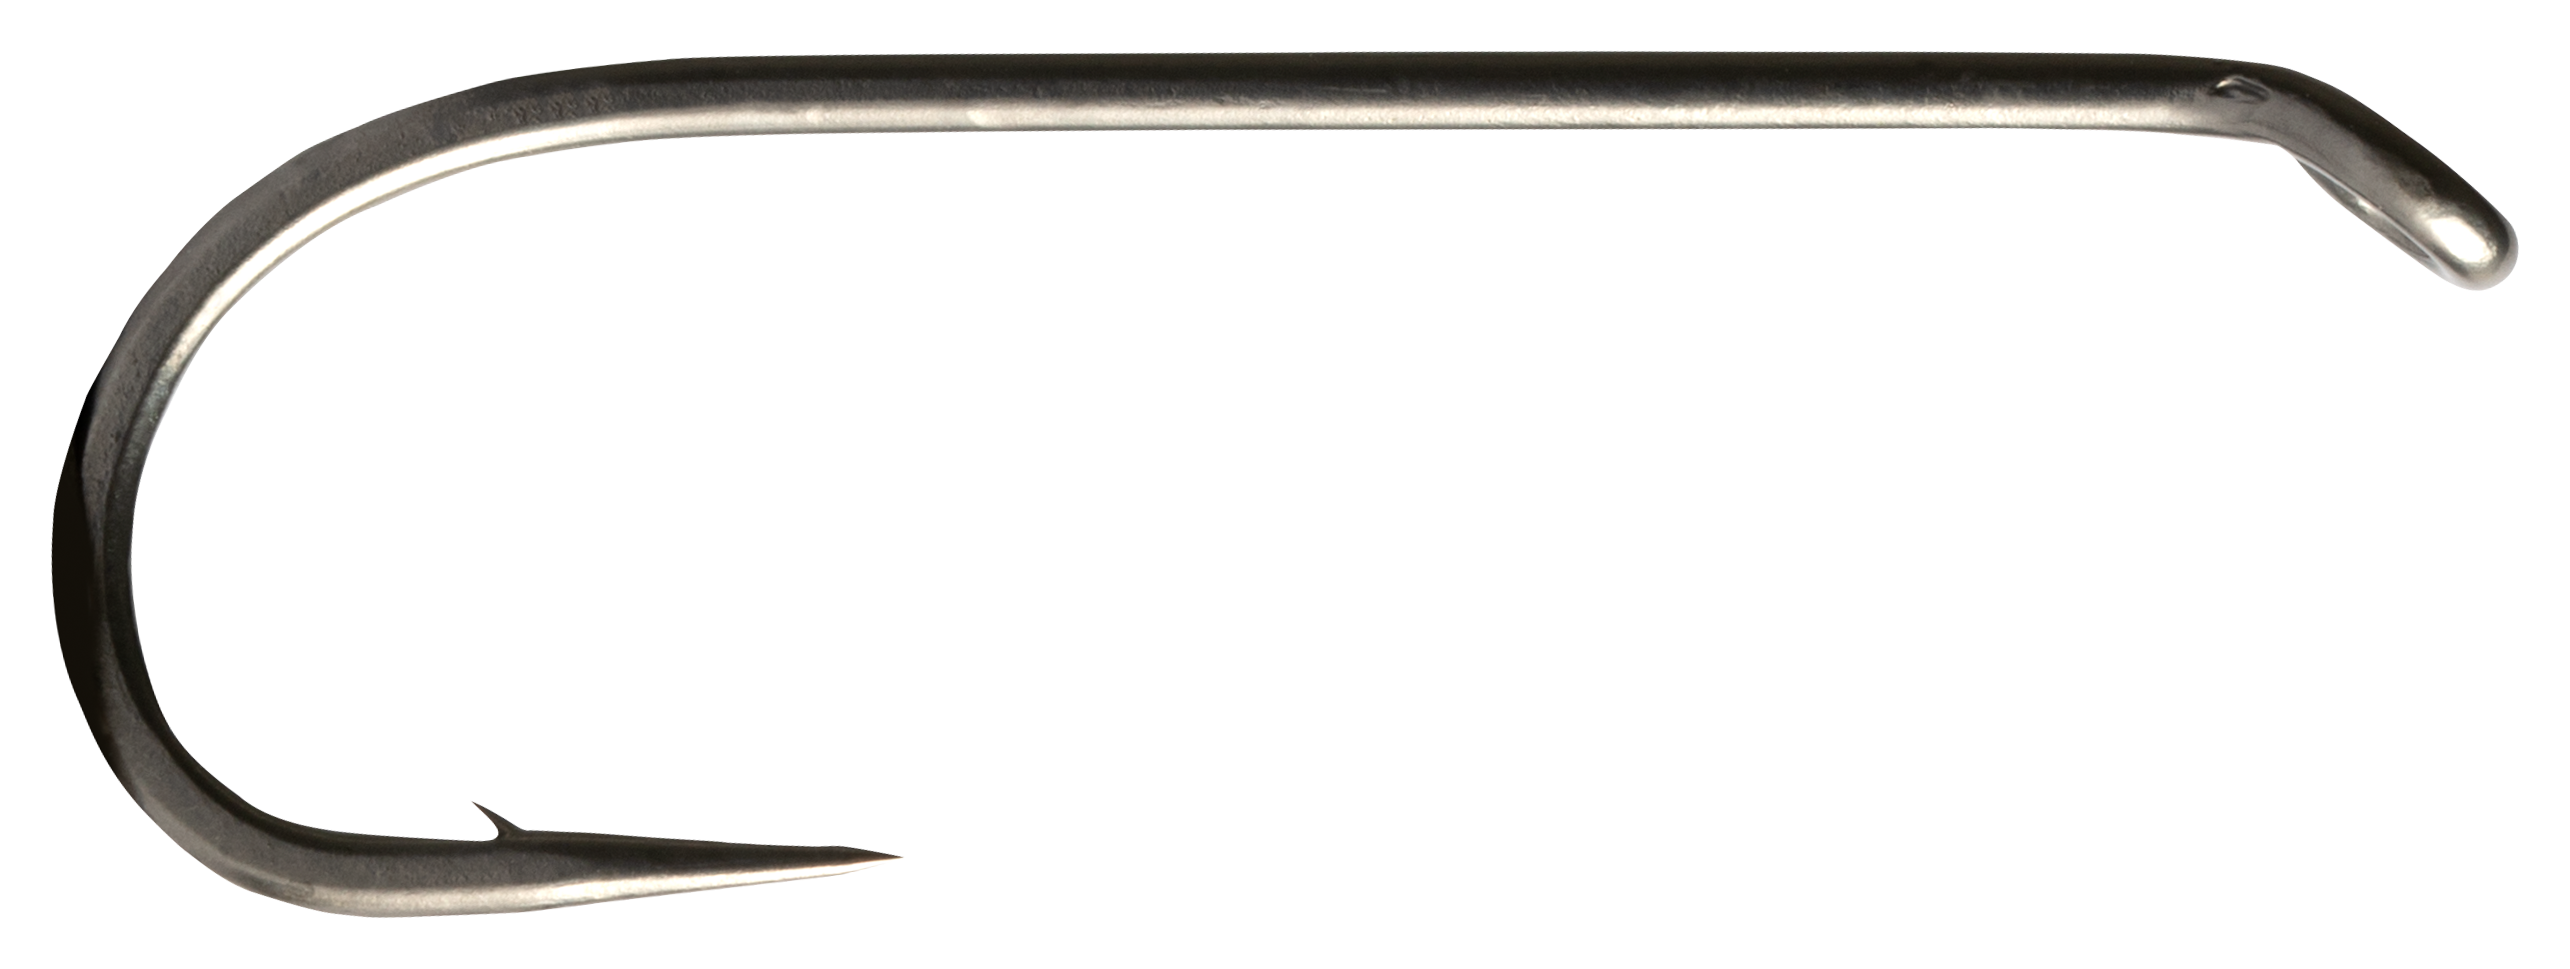 Mustad Heritage Streamer 2X-Strong Fly Hook Model R73AP - 12 - Gun Metal Matte